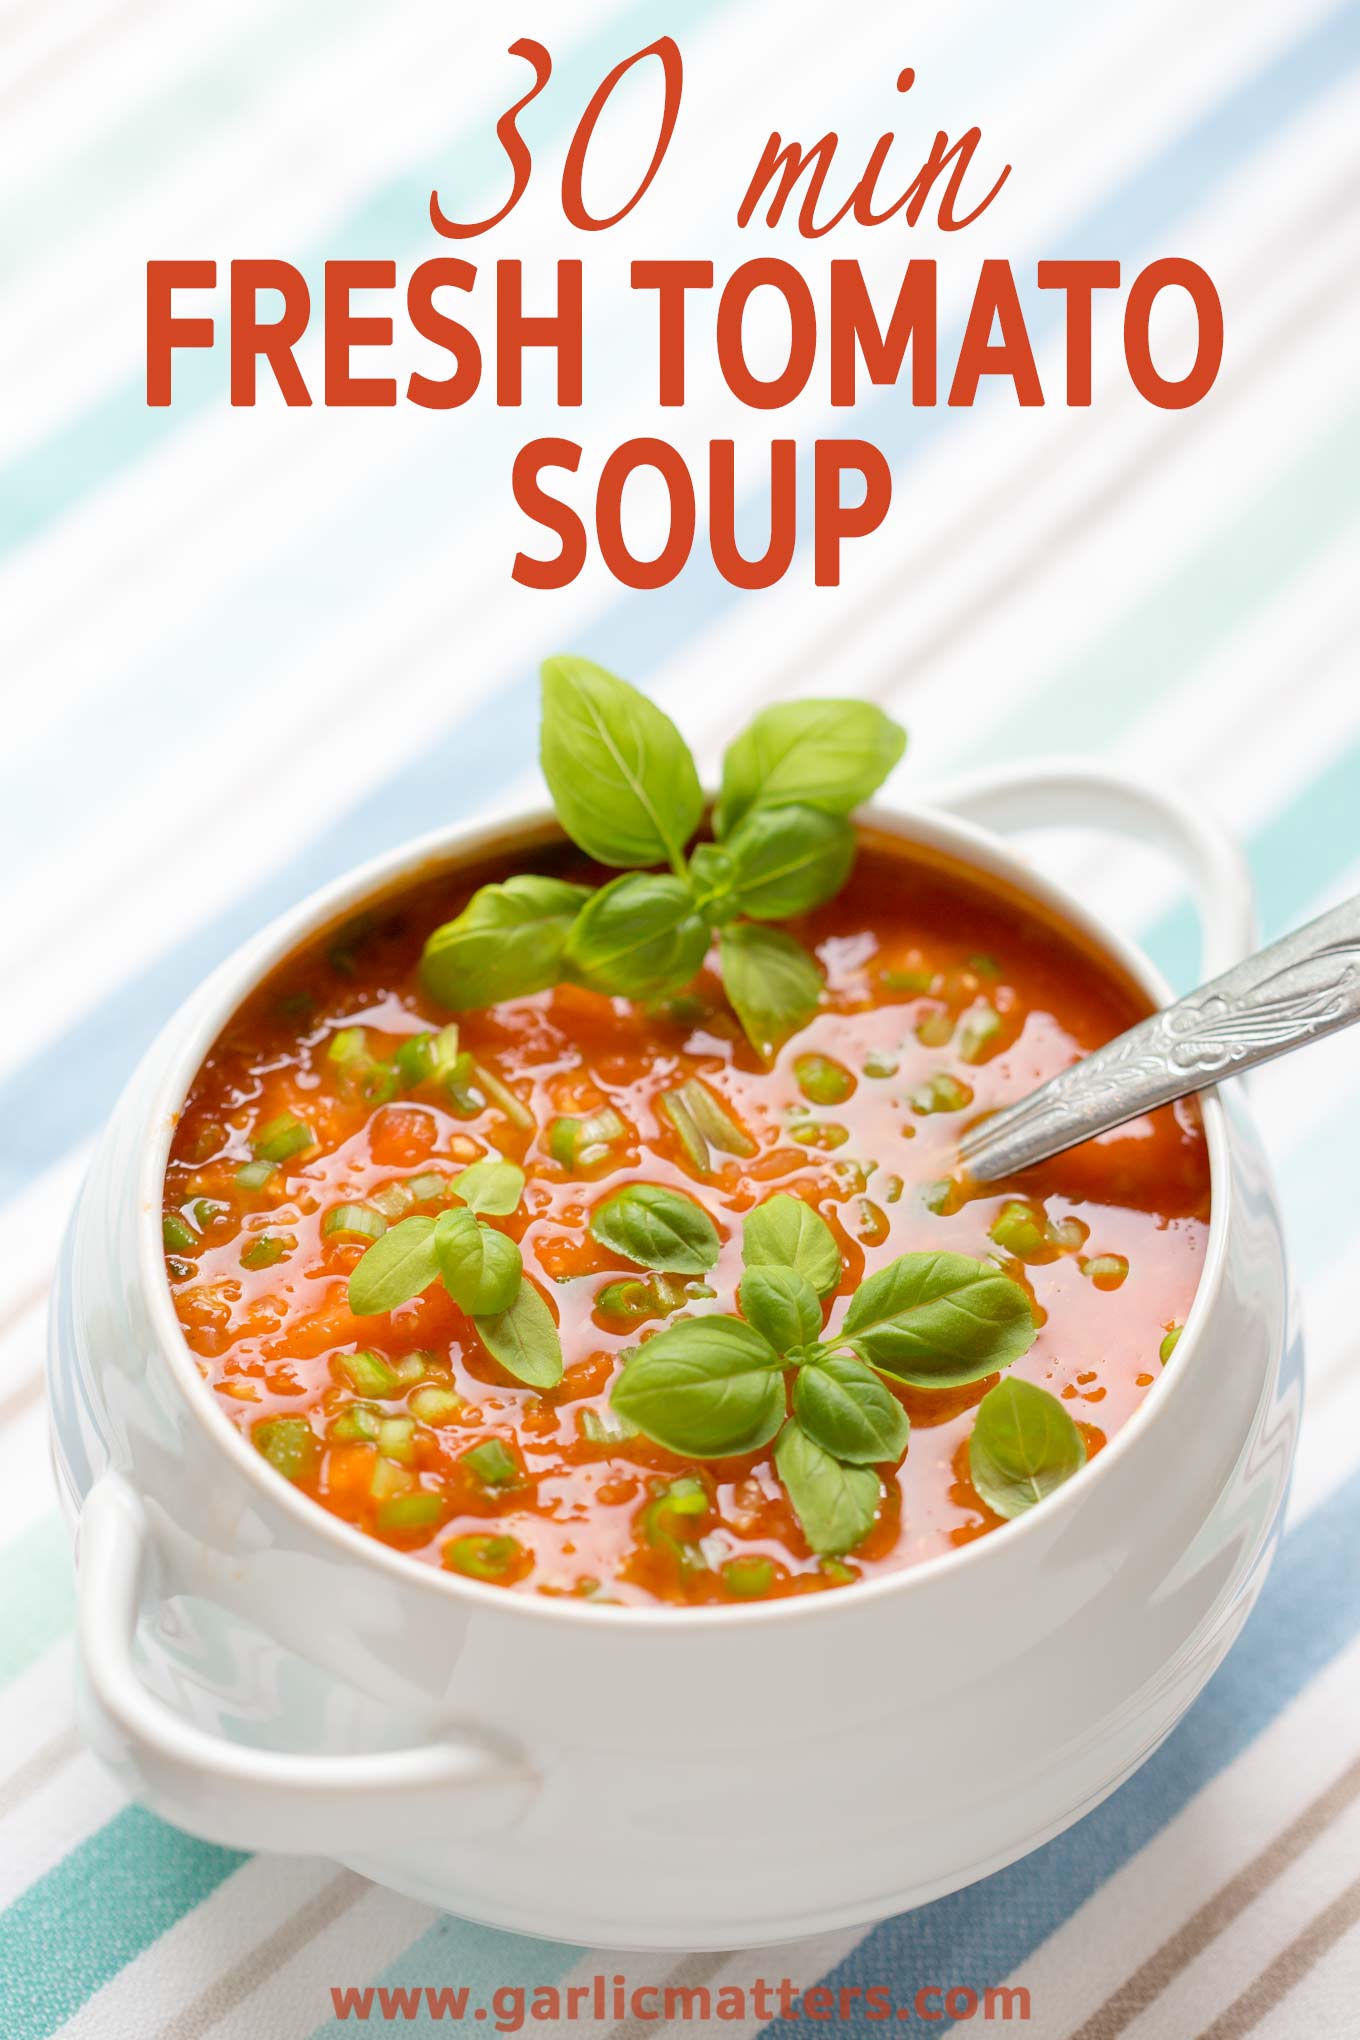 30 min FRESH TOMATO SOUP RECIPE | GARLIC MATTERS